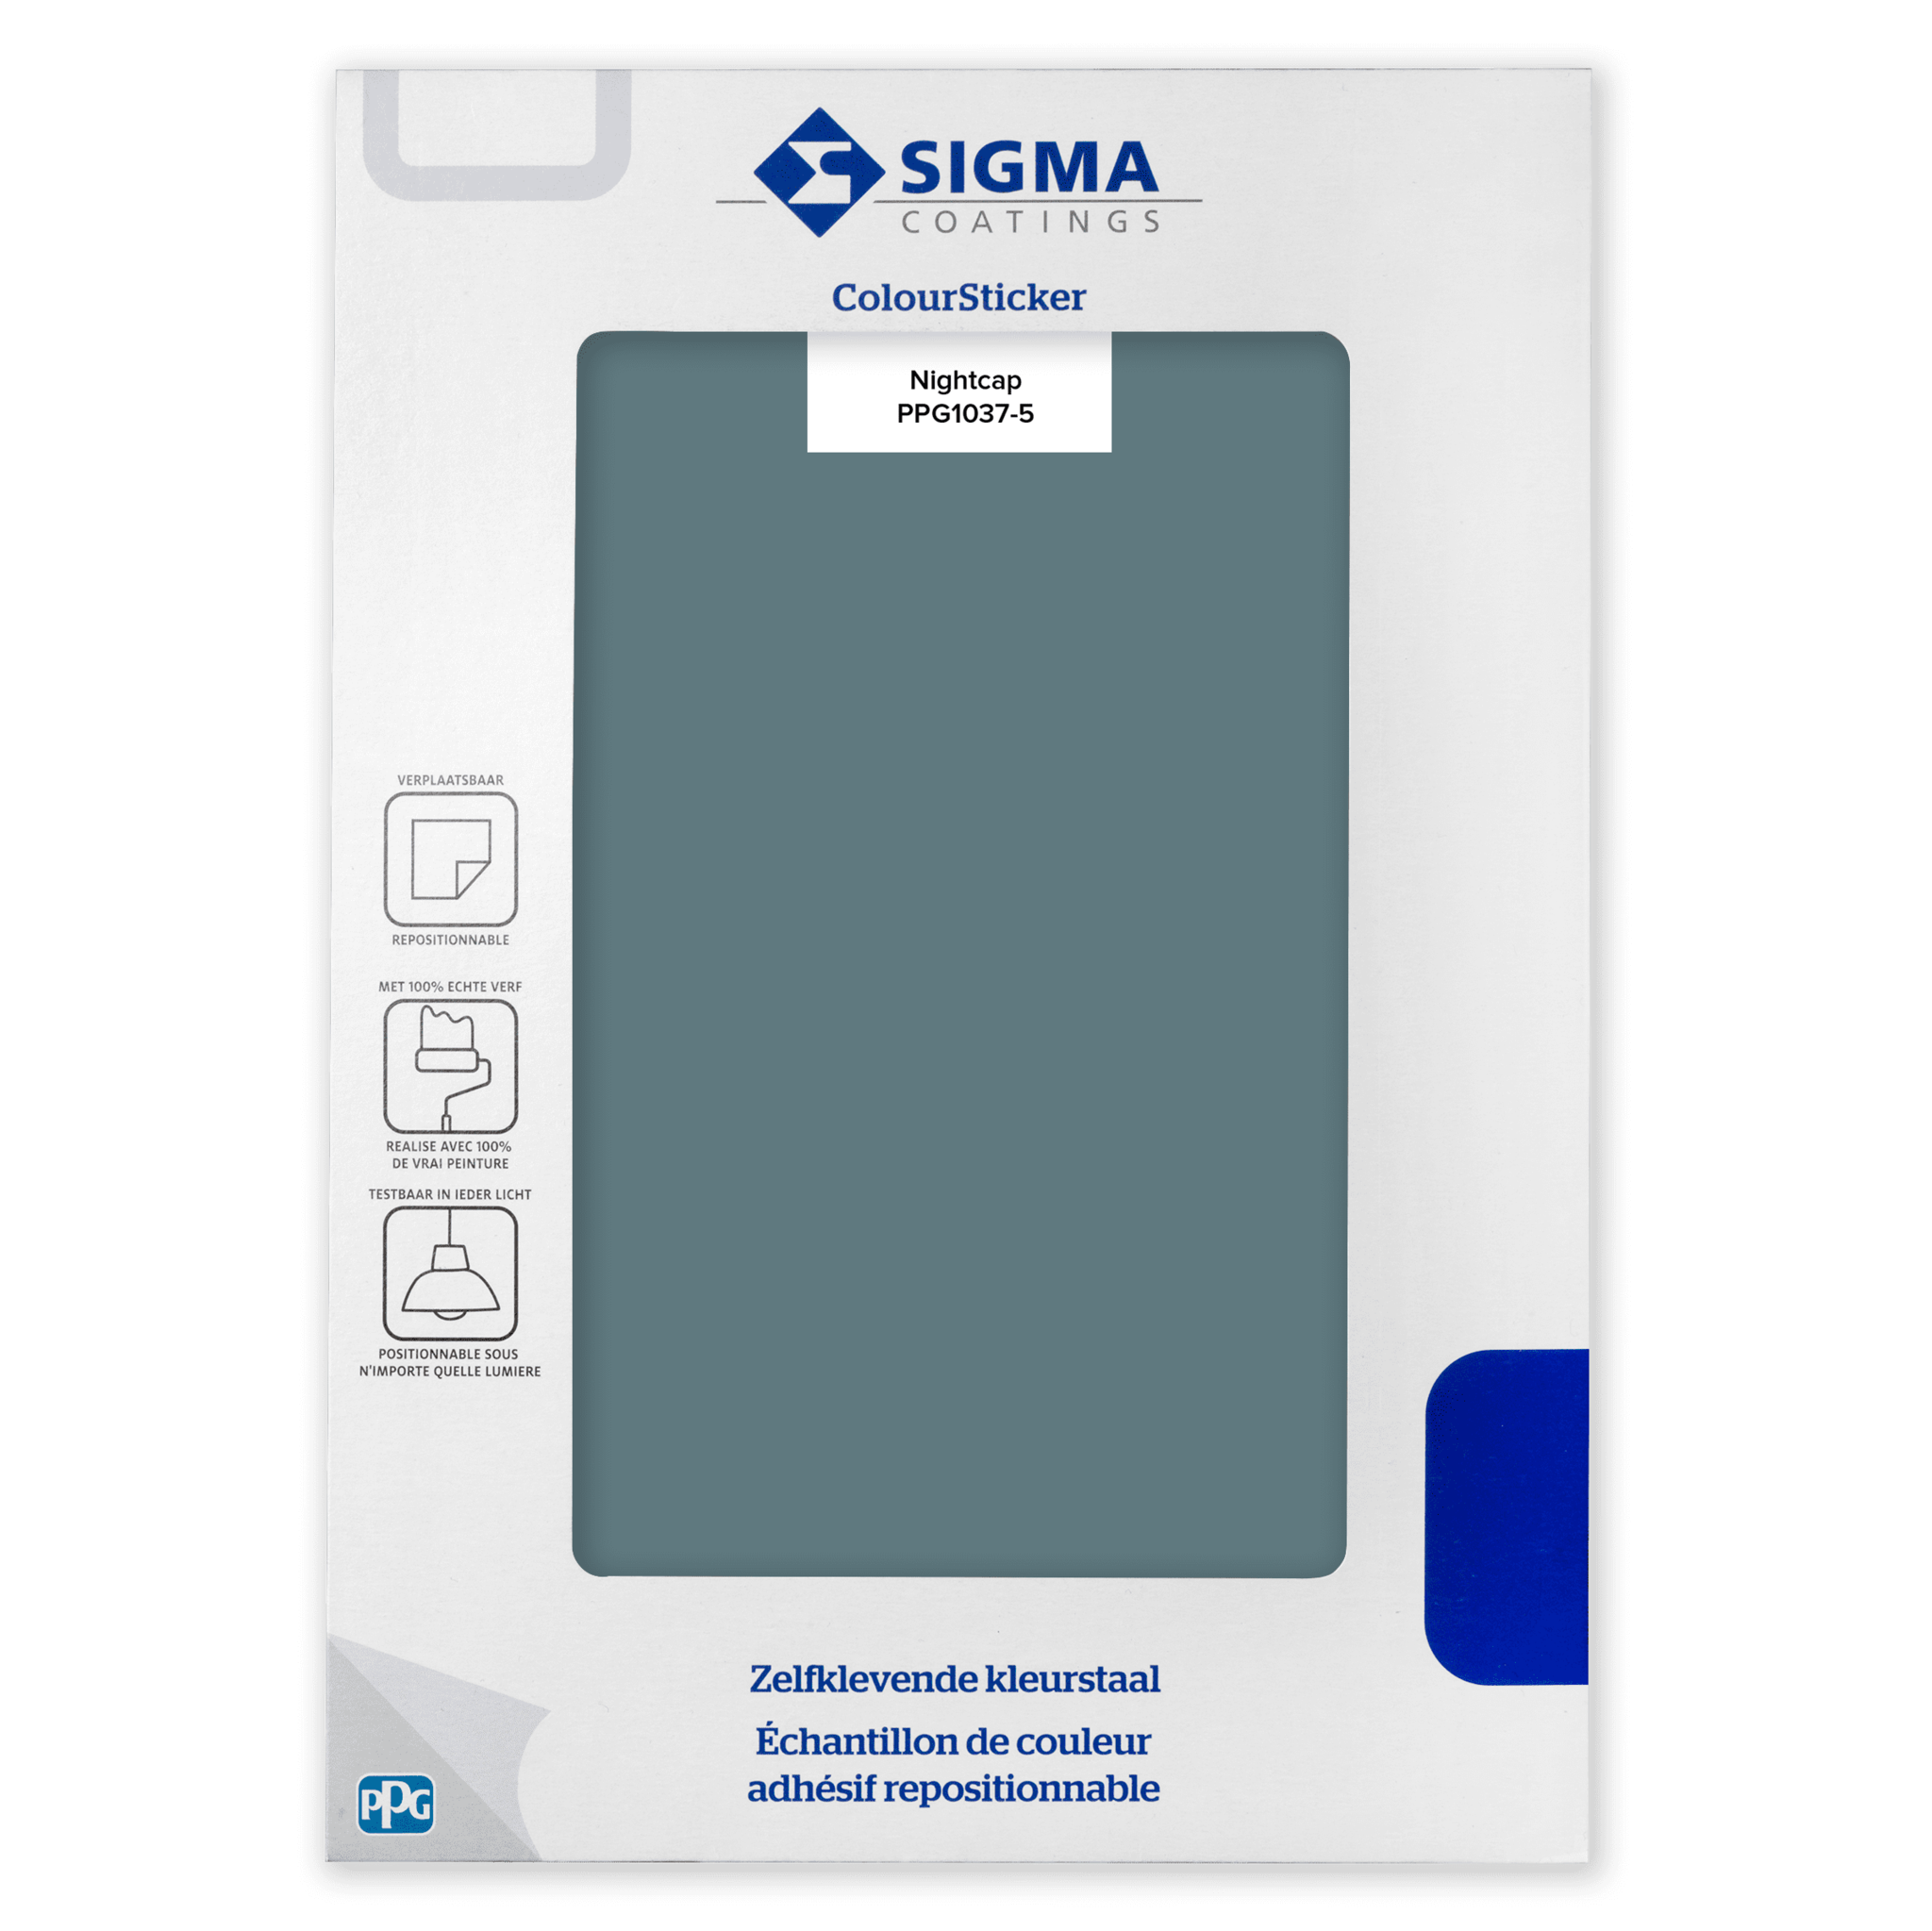 Sigma ColourSticker - Night cap 1037-5